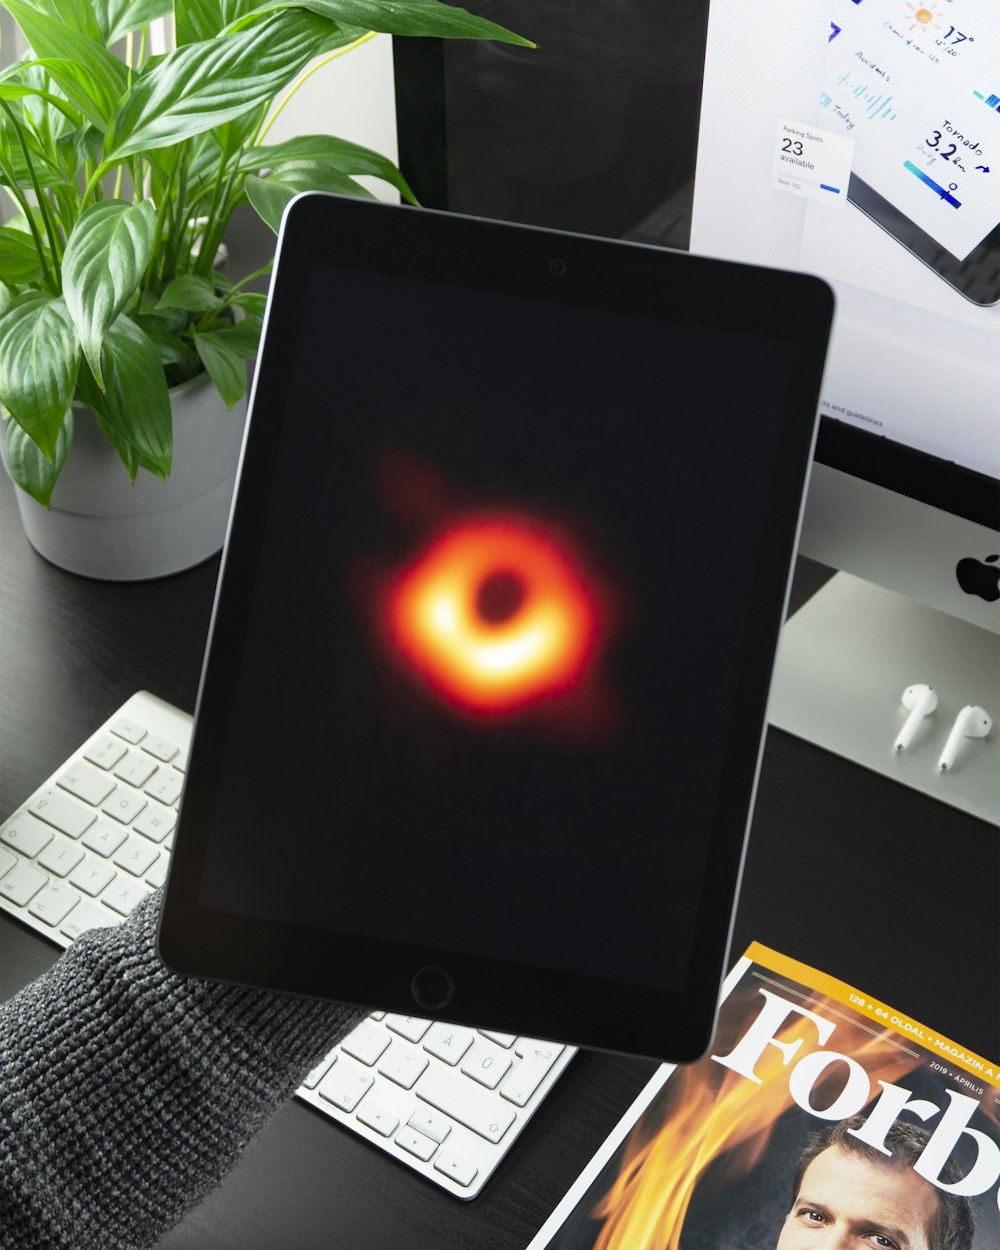 iPad displaying red circle